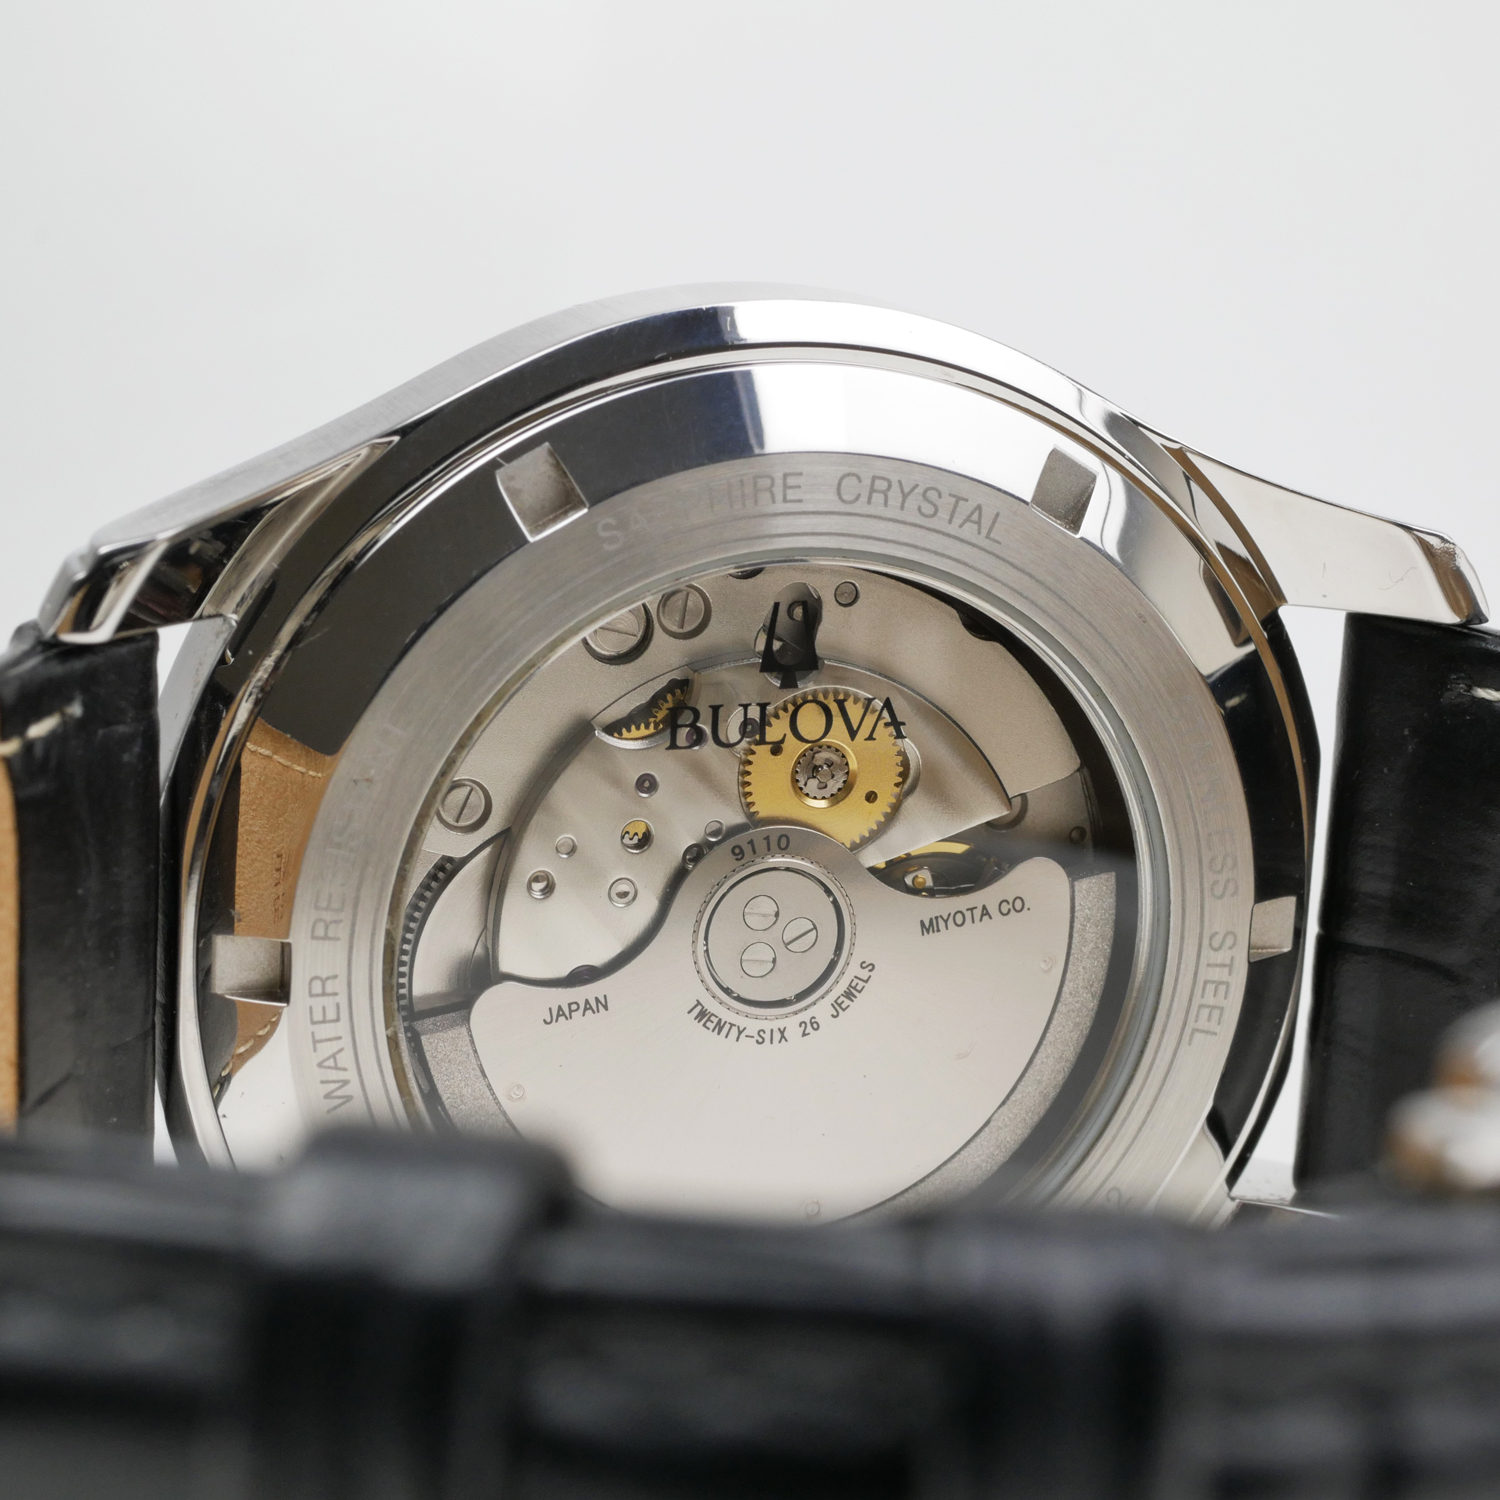 Bulova Classic Wilton Automatic Men's Watch Black Leather Strap / Blue Dial 96C142